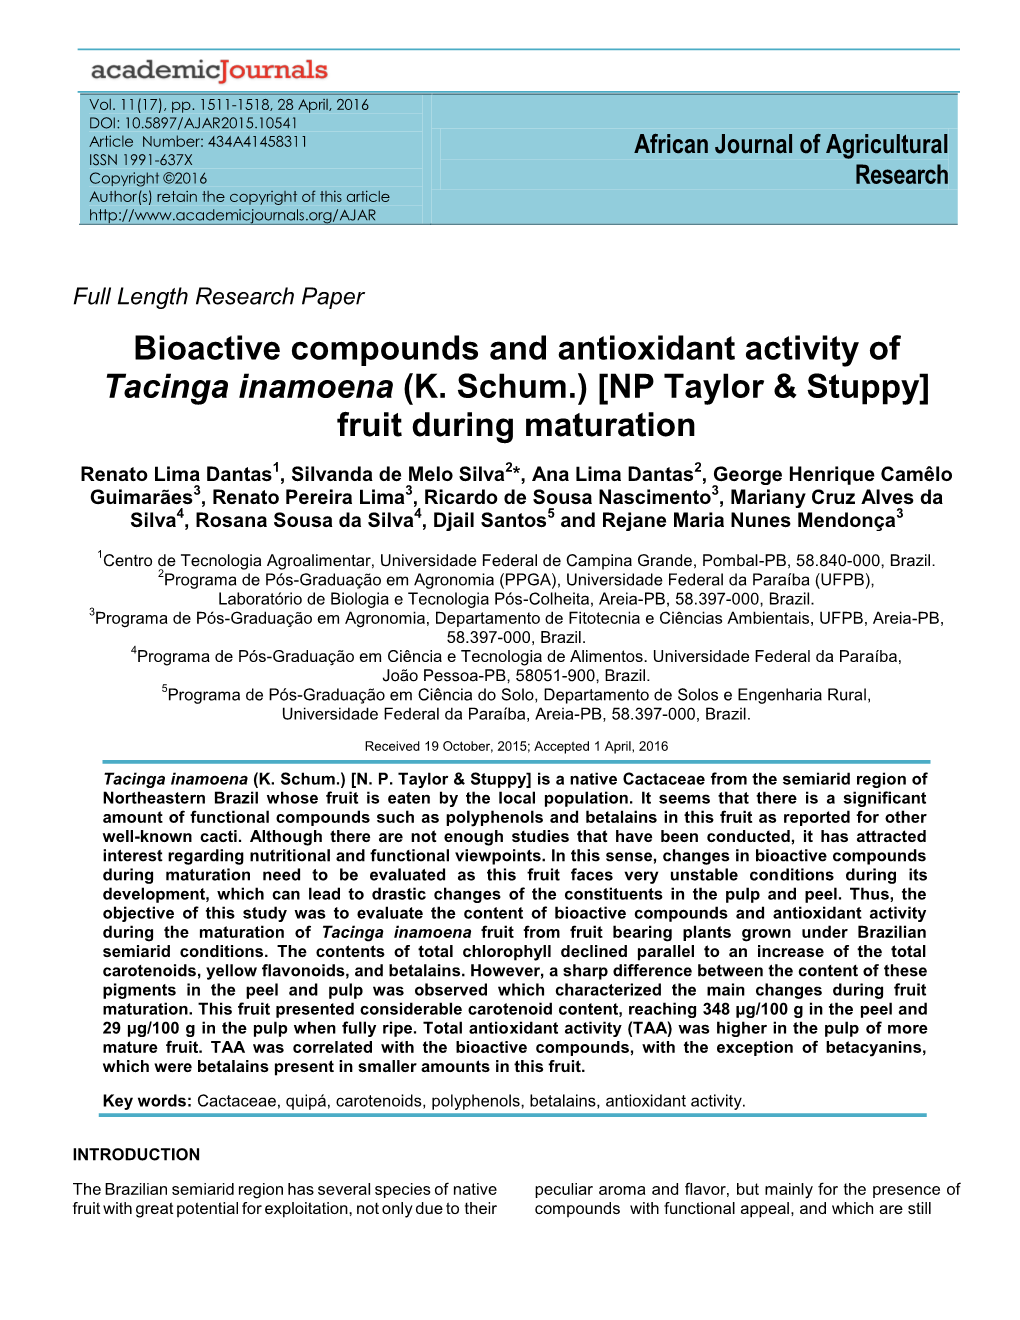 Bioactive Compounds and Antioxidant Activity of Tacinga Inamoena (K